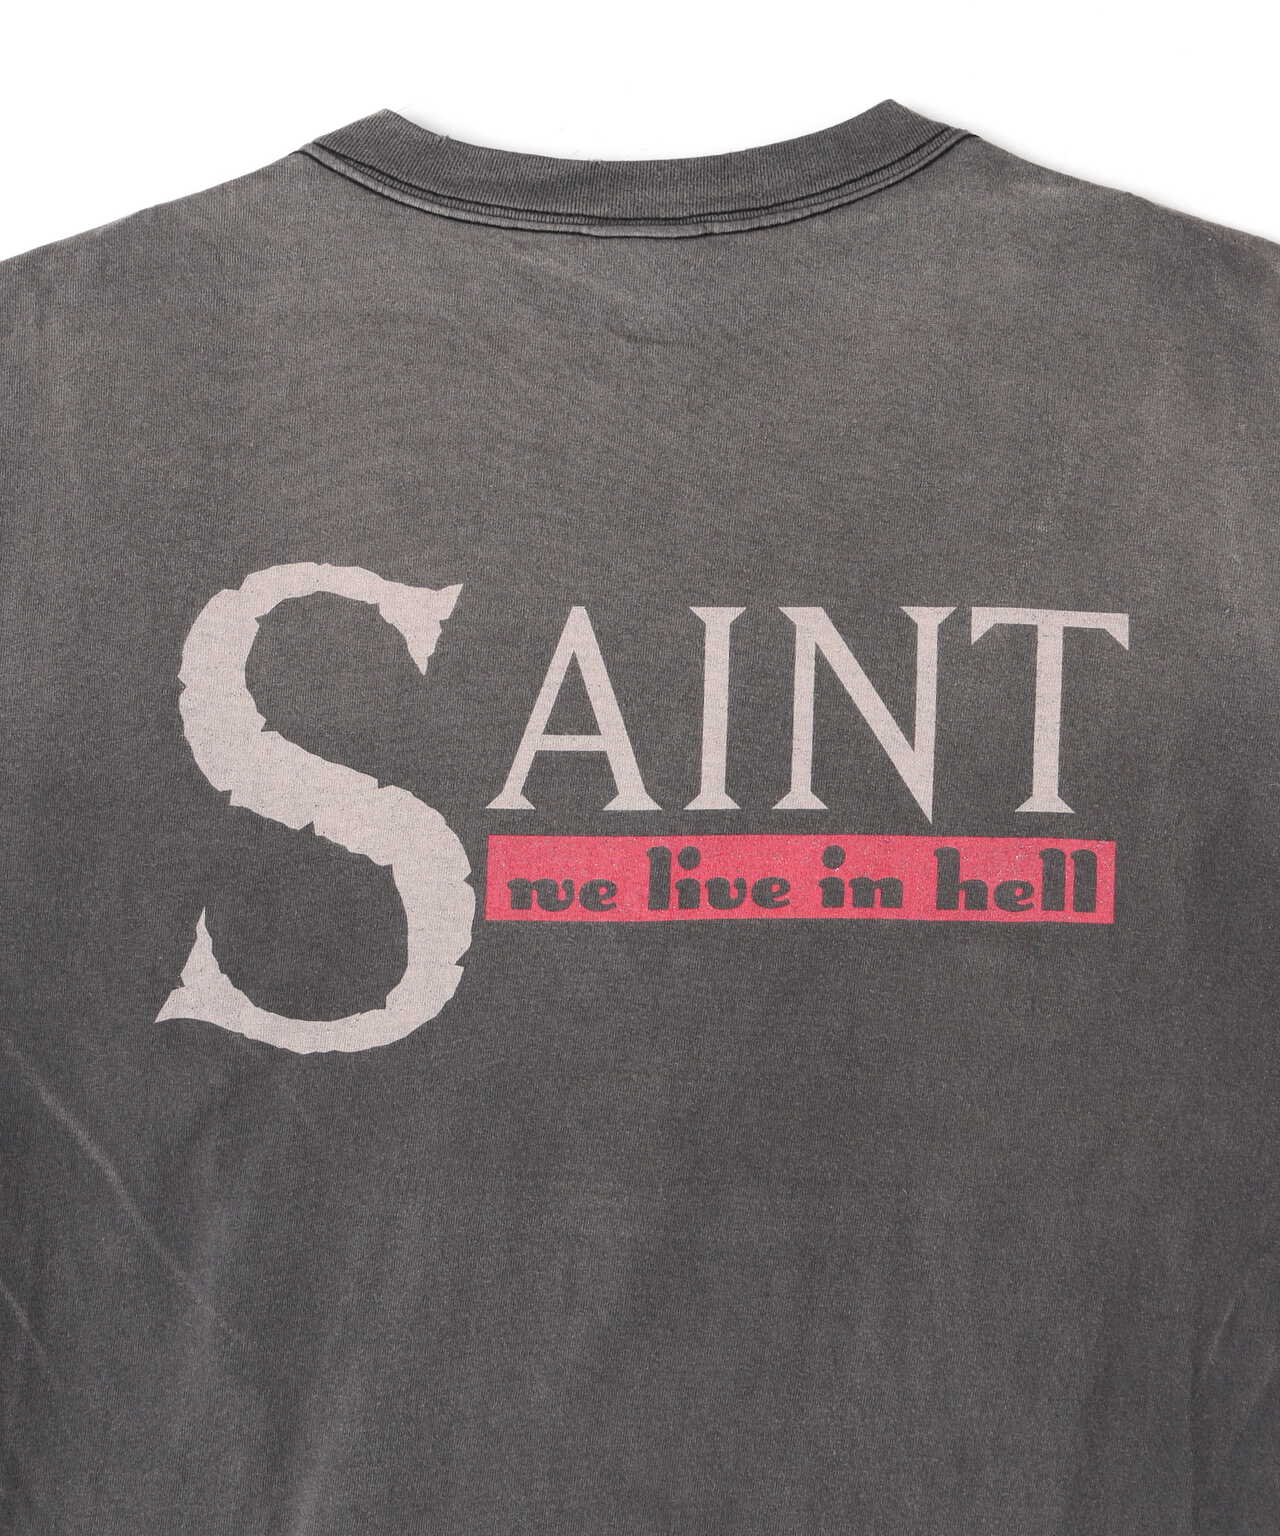 saint mxxxxxx we live hell T